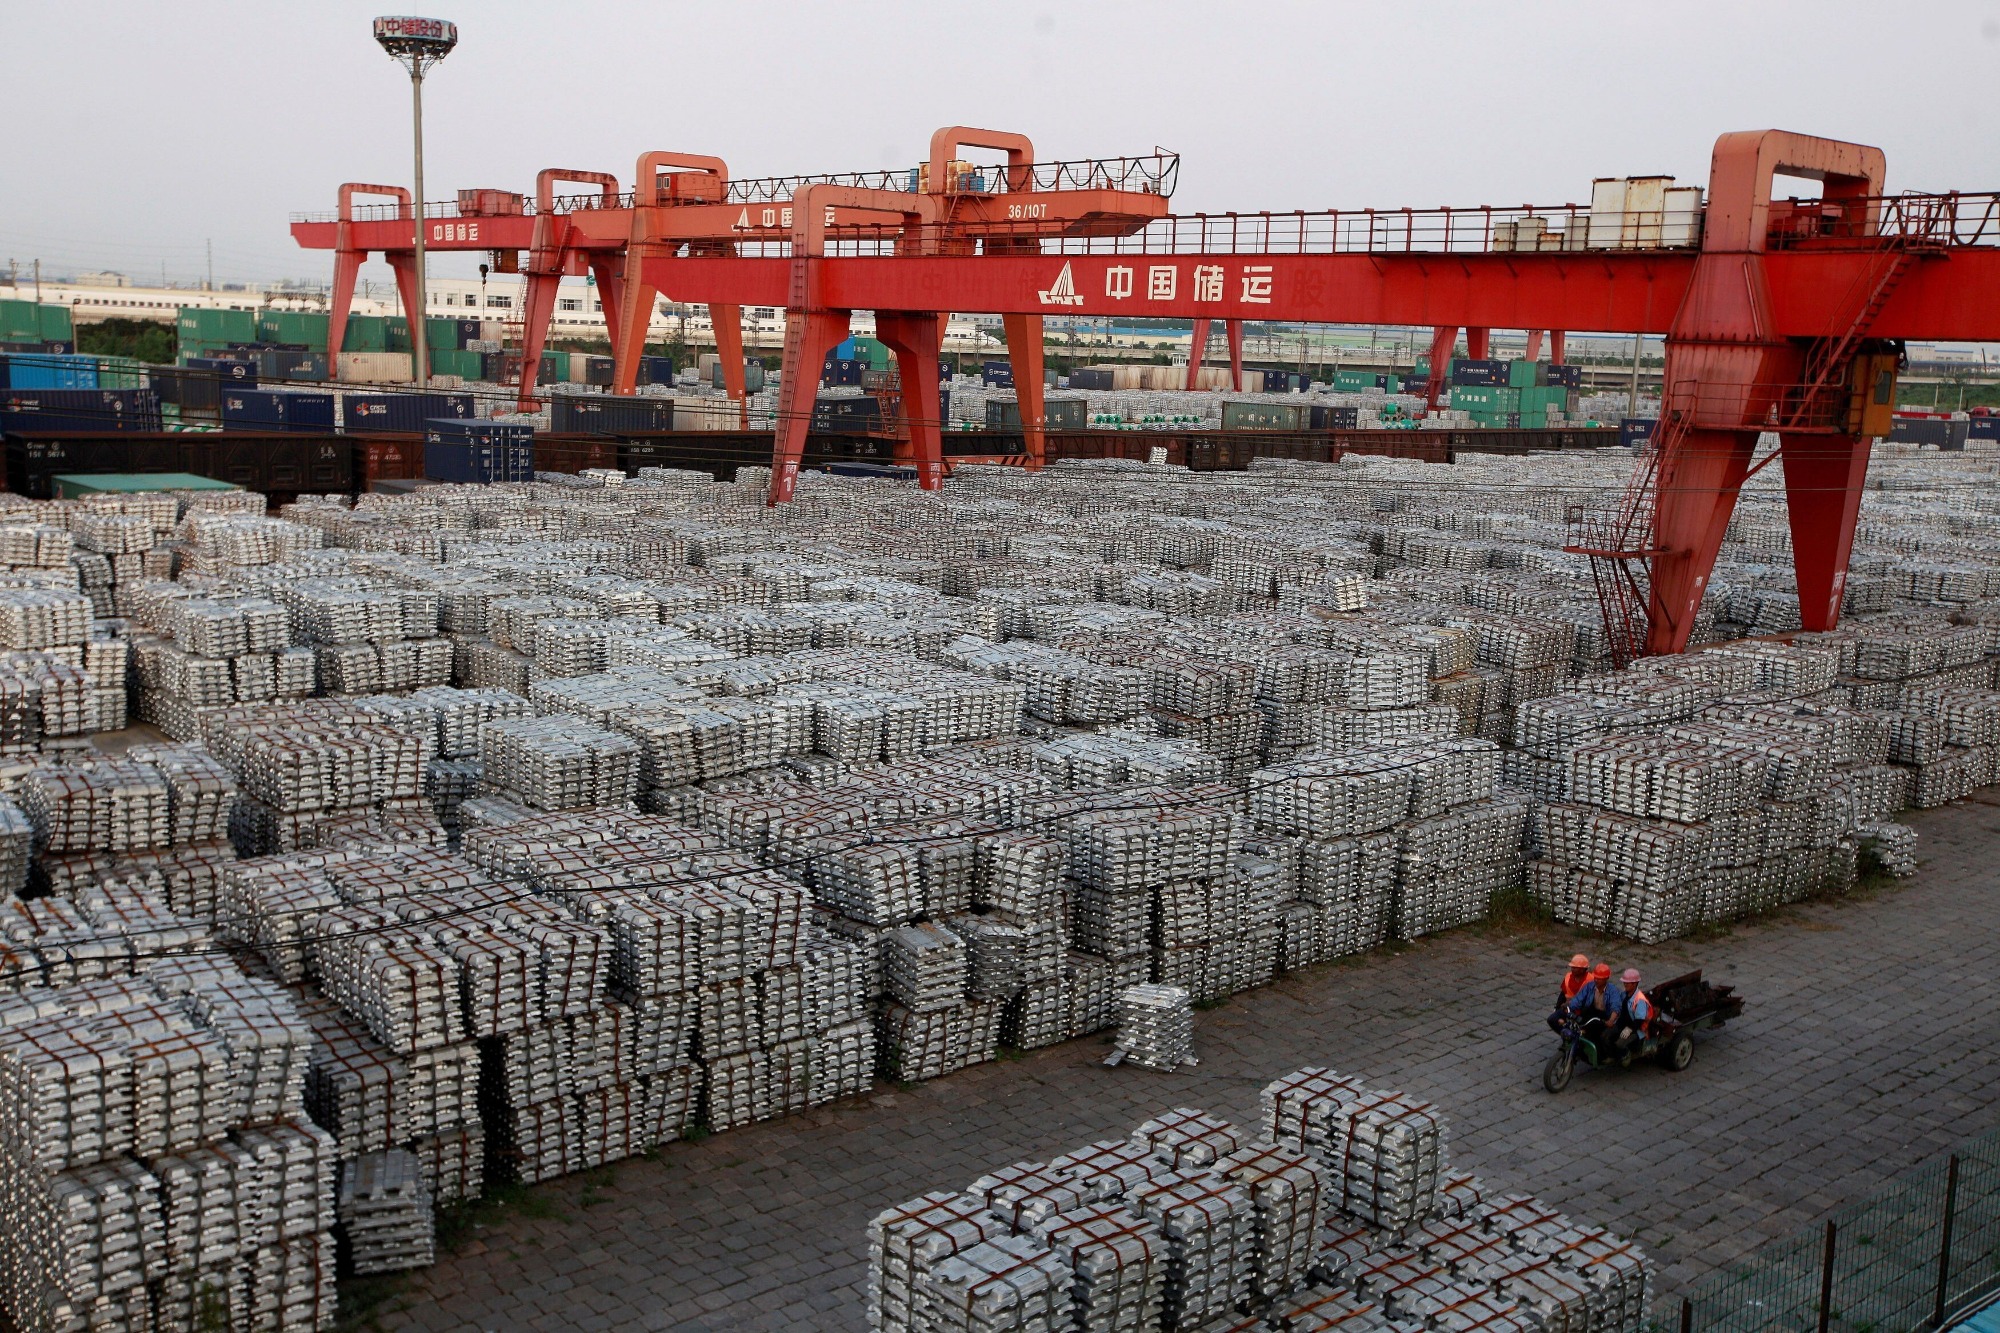 SMM A00 aluminium ingot price gathers RMB1600/t Y-o-Y to reach RMB20060/t; Aluminium alloy prices fall RMB50/t